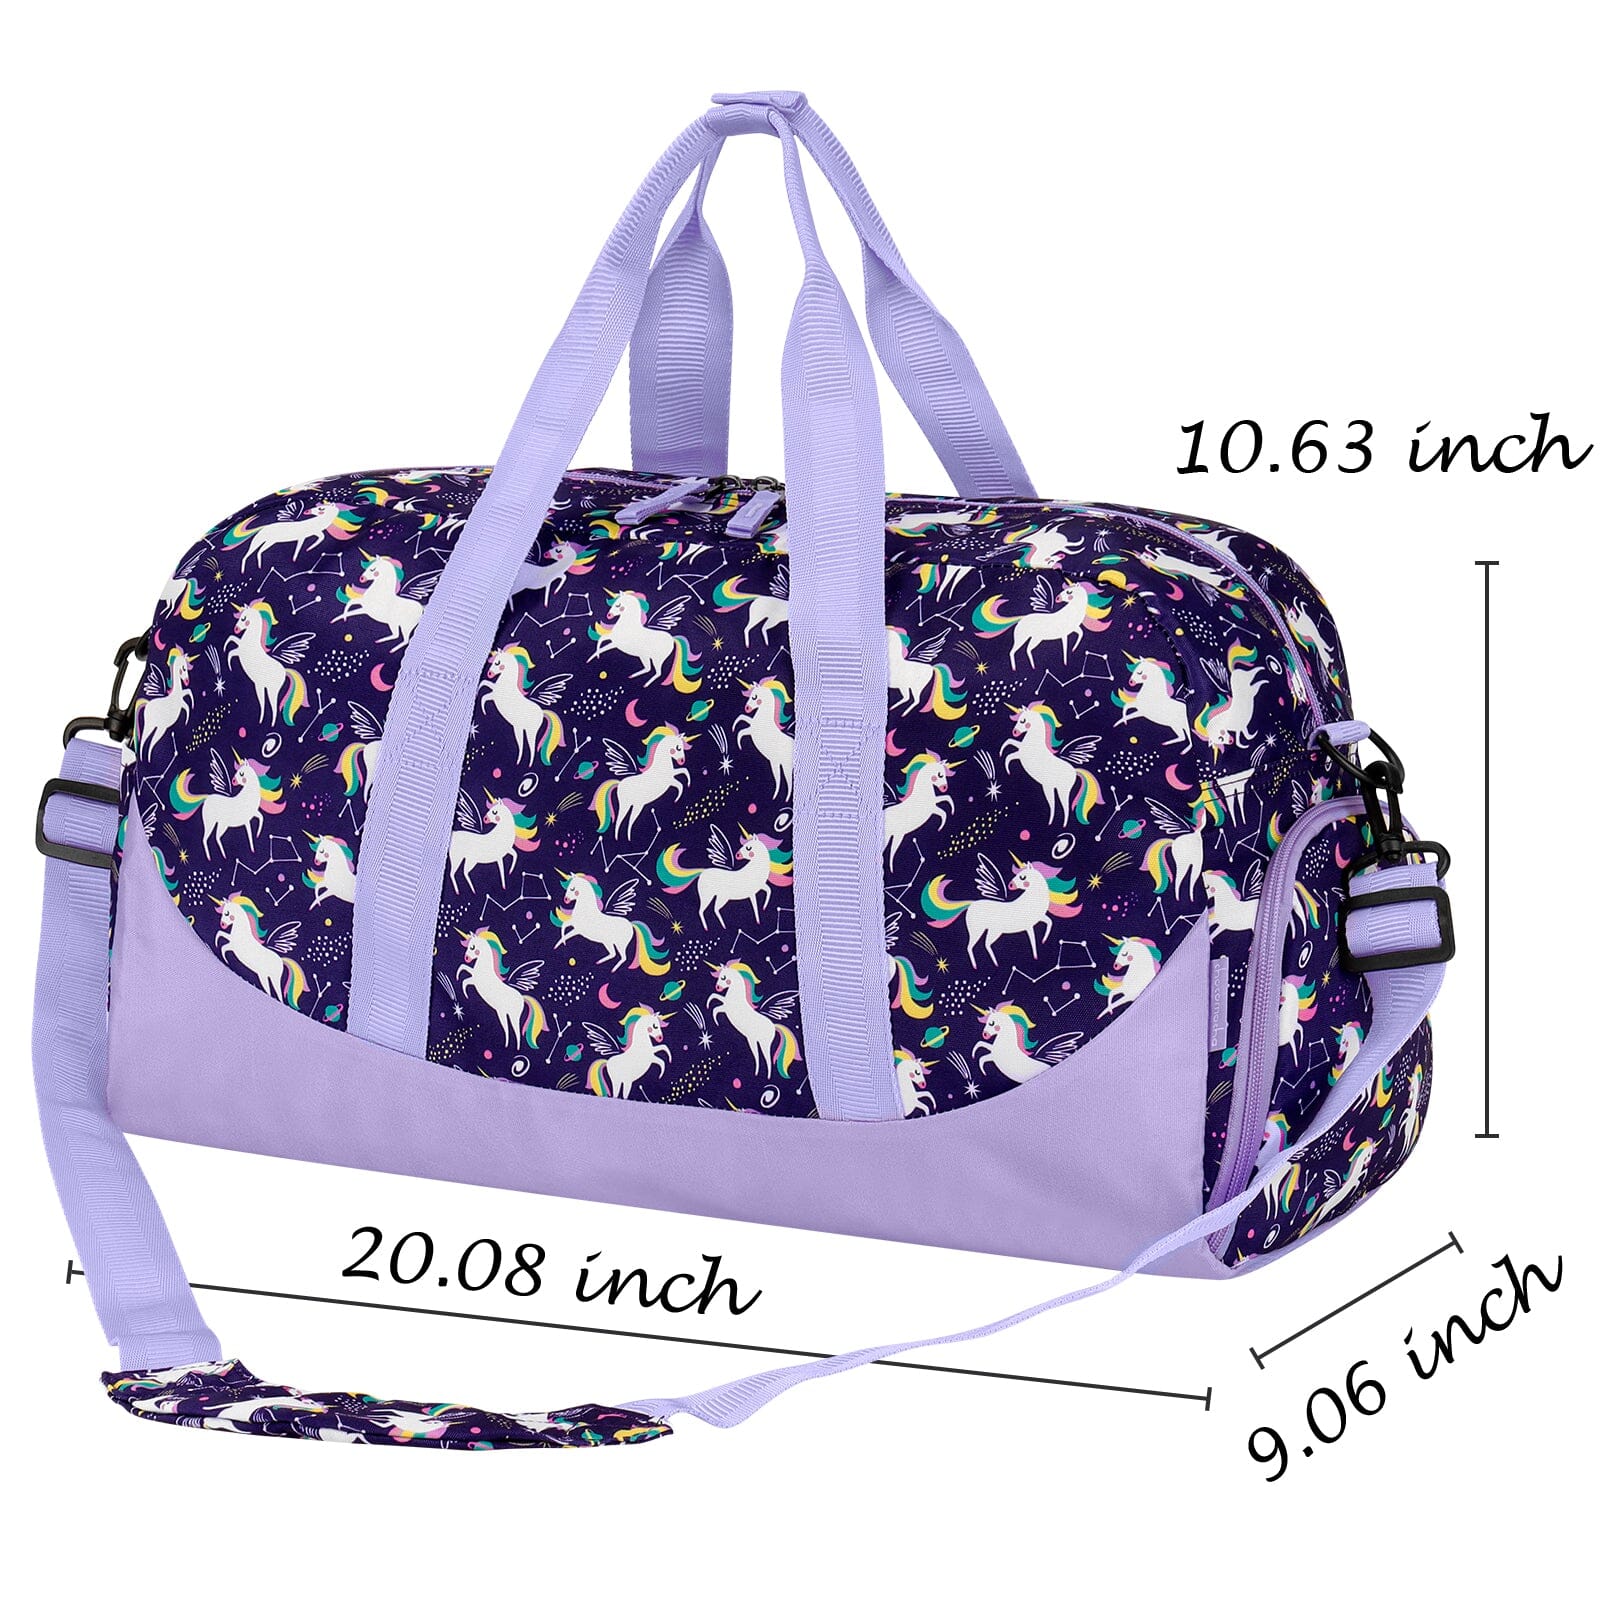 Choco Mocha Kids Purple Duffle Bag for Girls, Kids Unicorn Travel Bag 20.08*9.06*10.63 Inches chocomochakids 